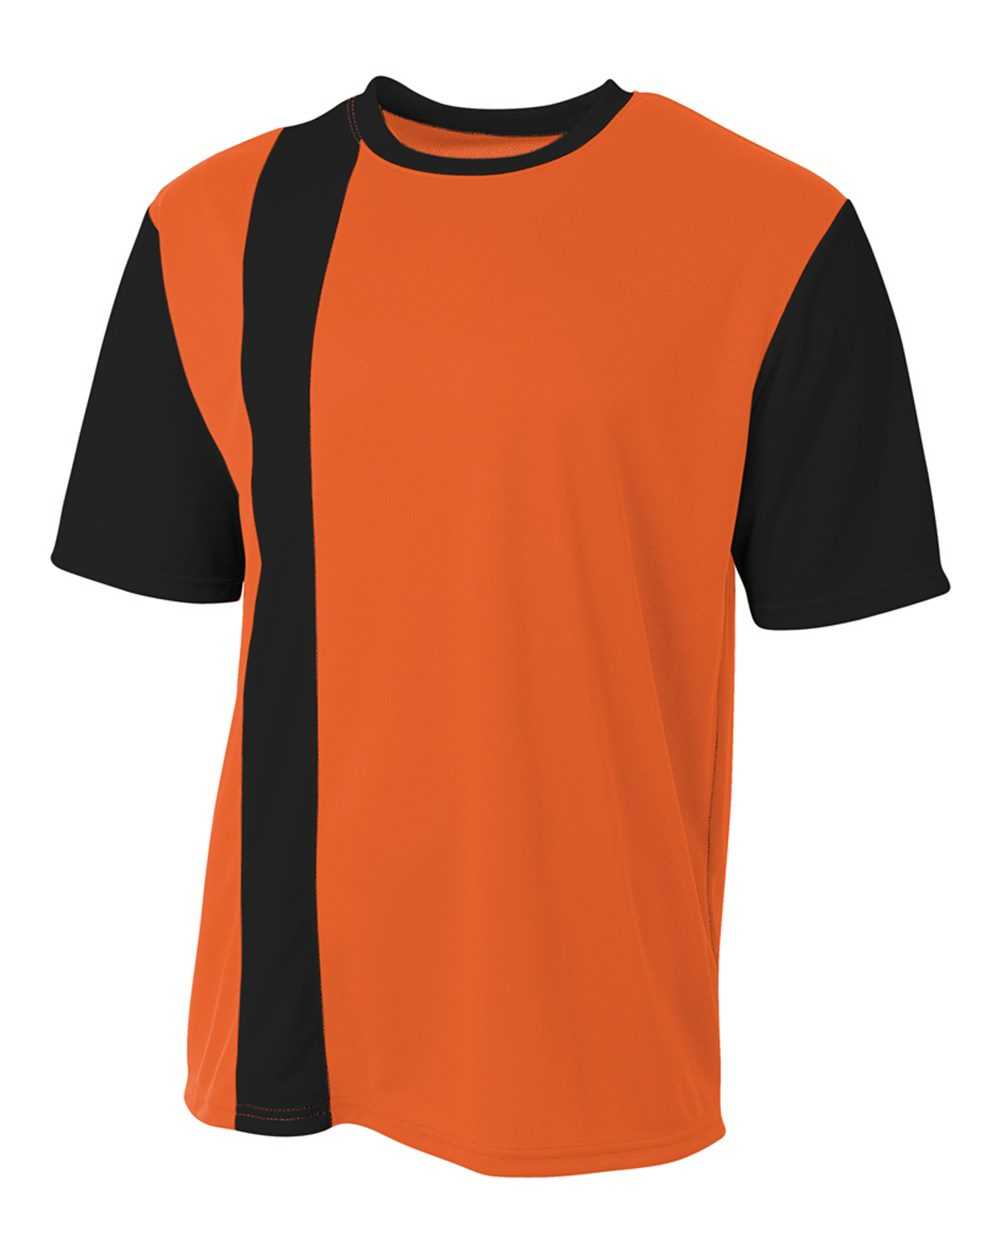 A4 N3016 Legend Soccer Jersey - Orange Black - HIT a Double